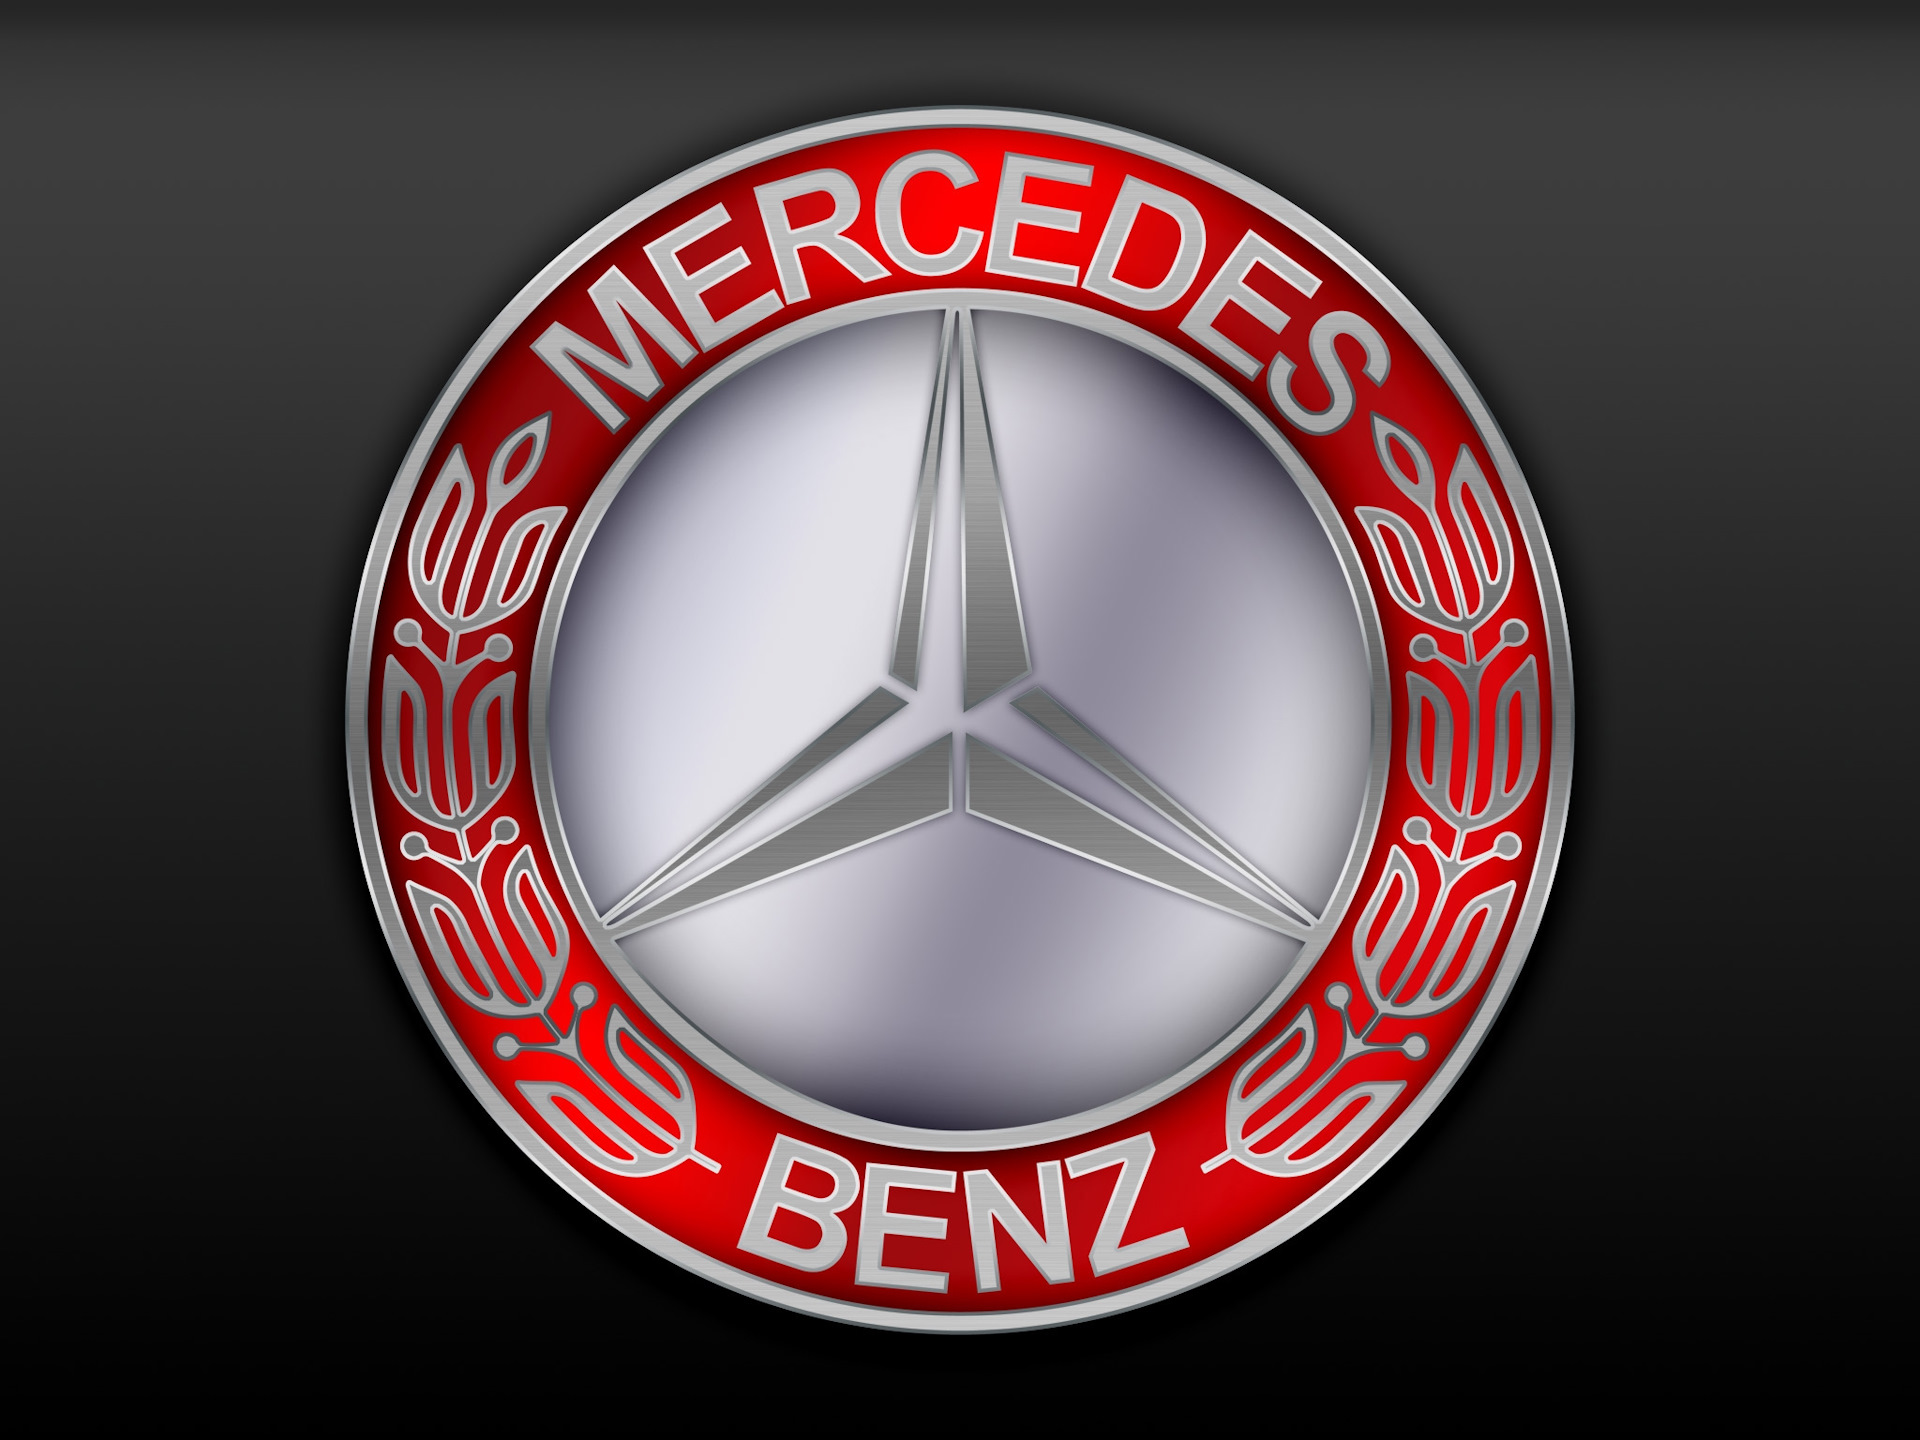 Merceds logo